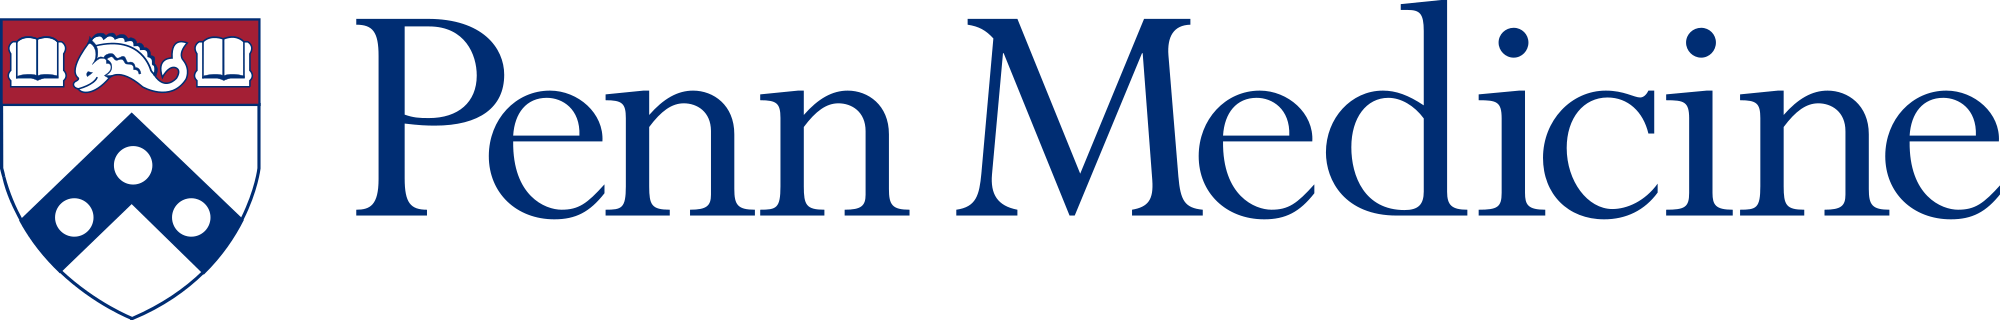 Penn Logo - Penn Medicine and University of Pennsylvania Health System logo